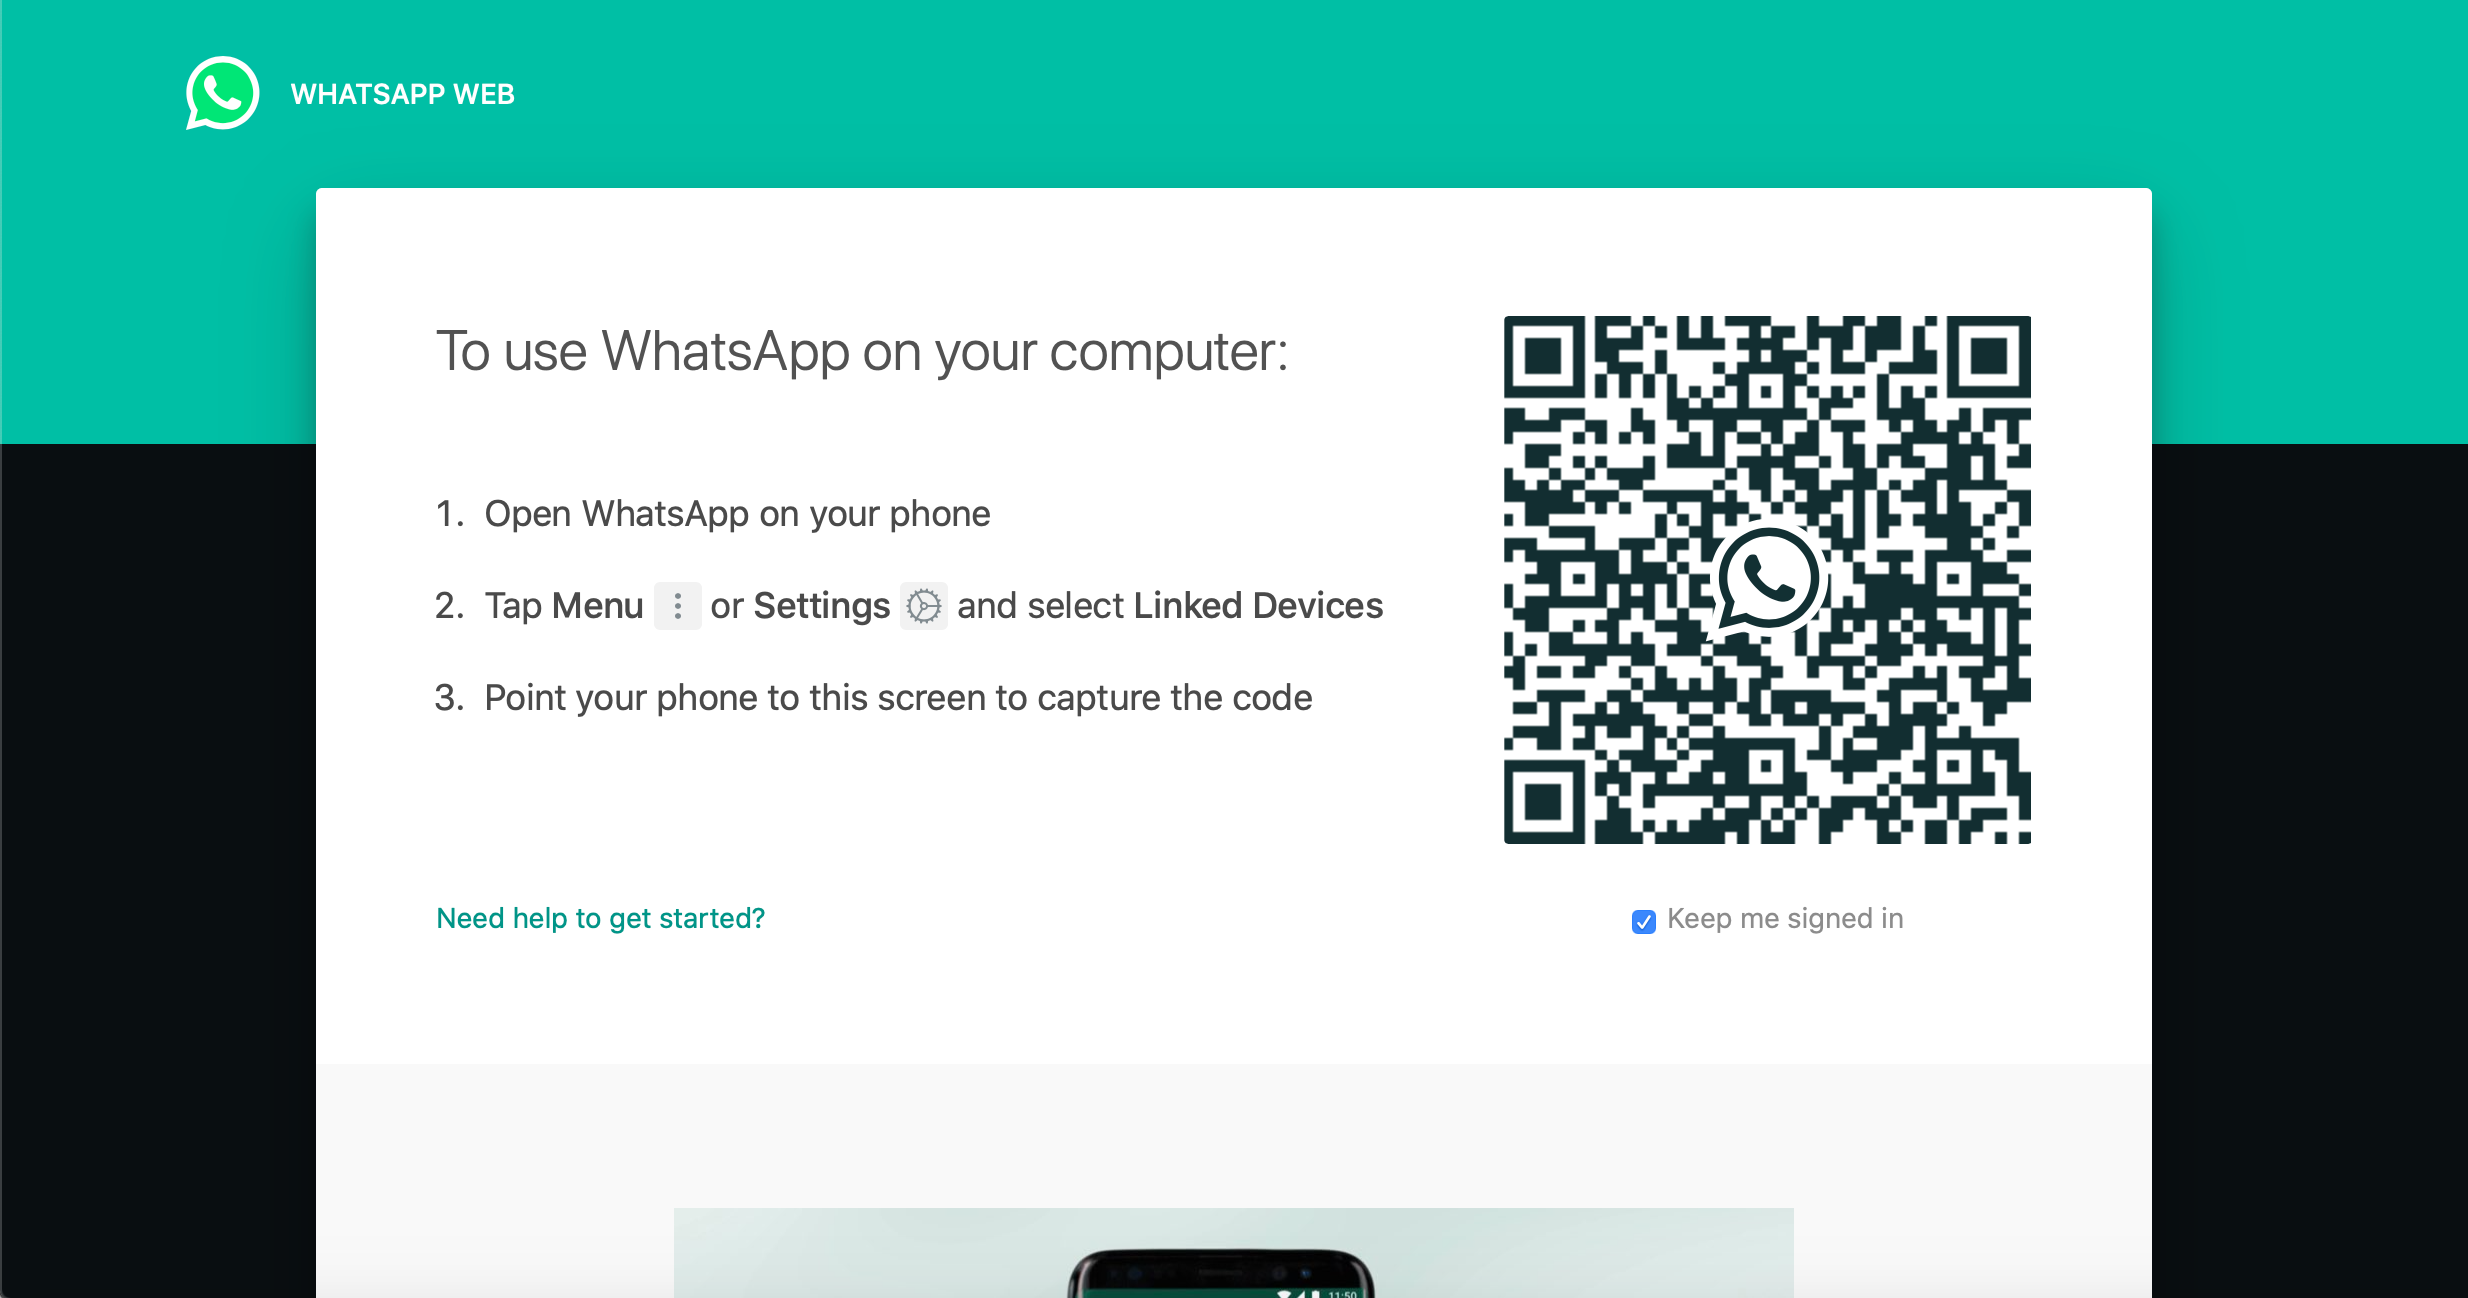 WhatsApp Web and mobile